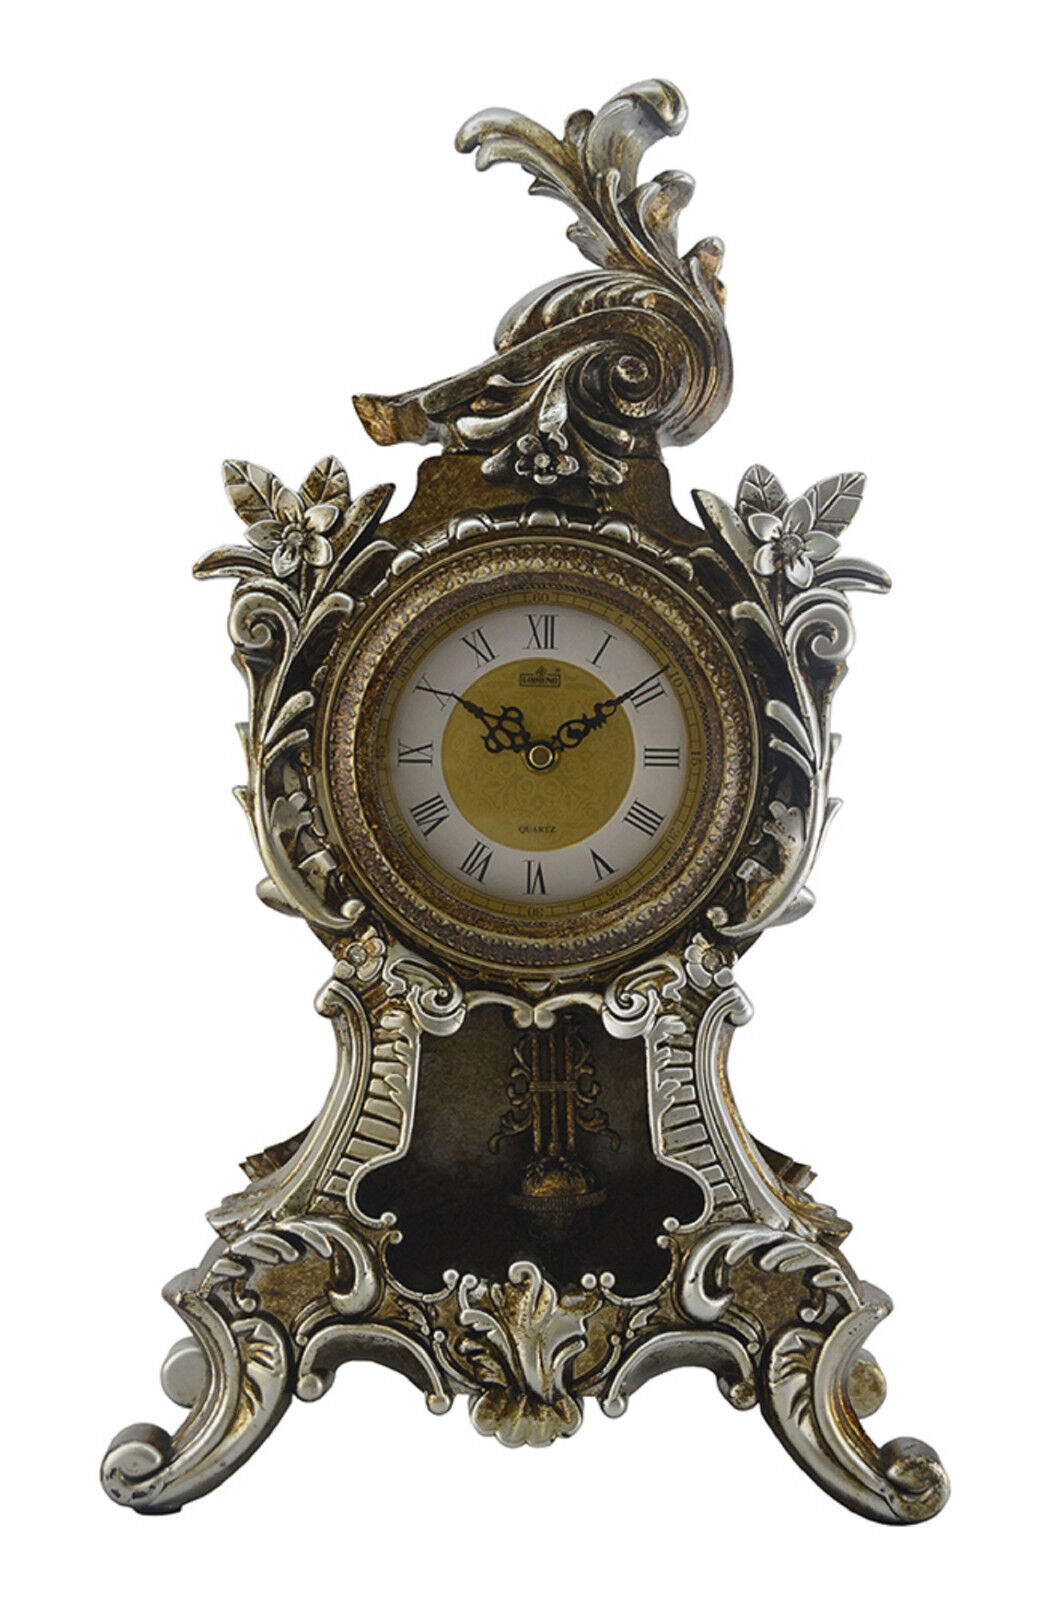 Ornate Victorian Mantel Clock with Swinging Pendulum